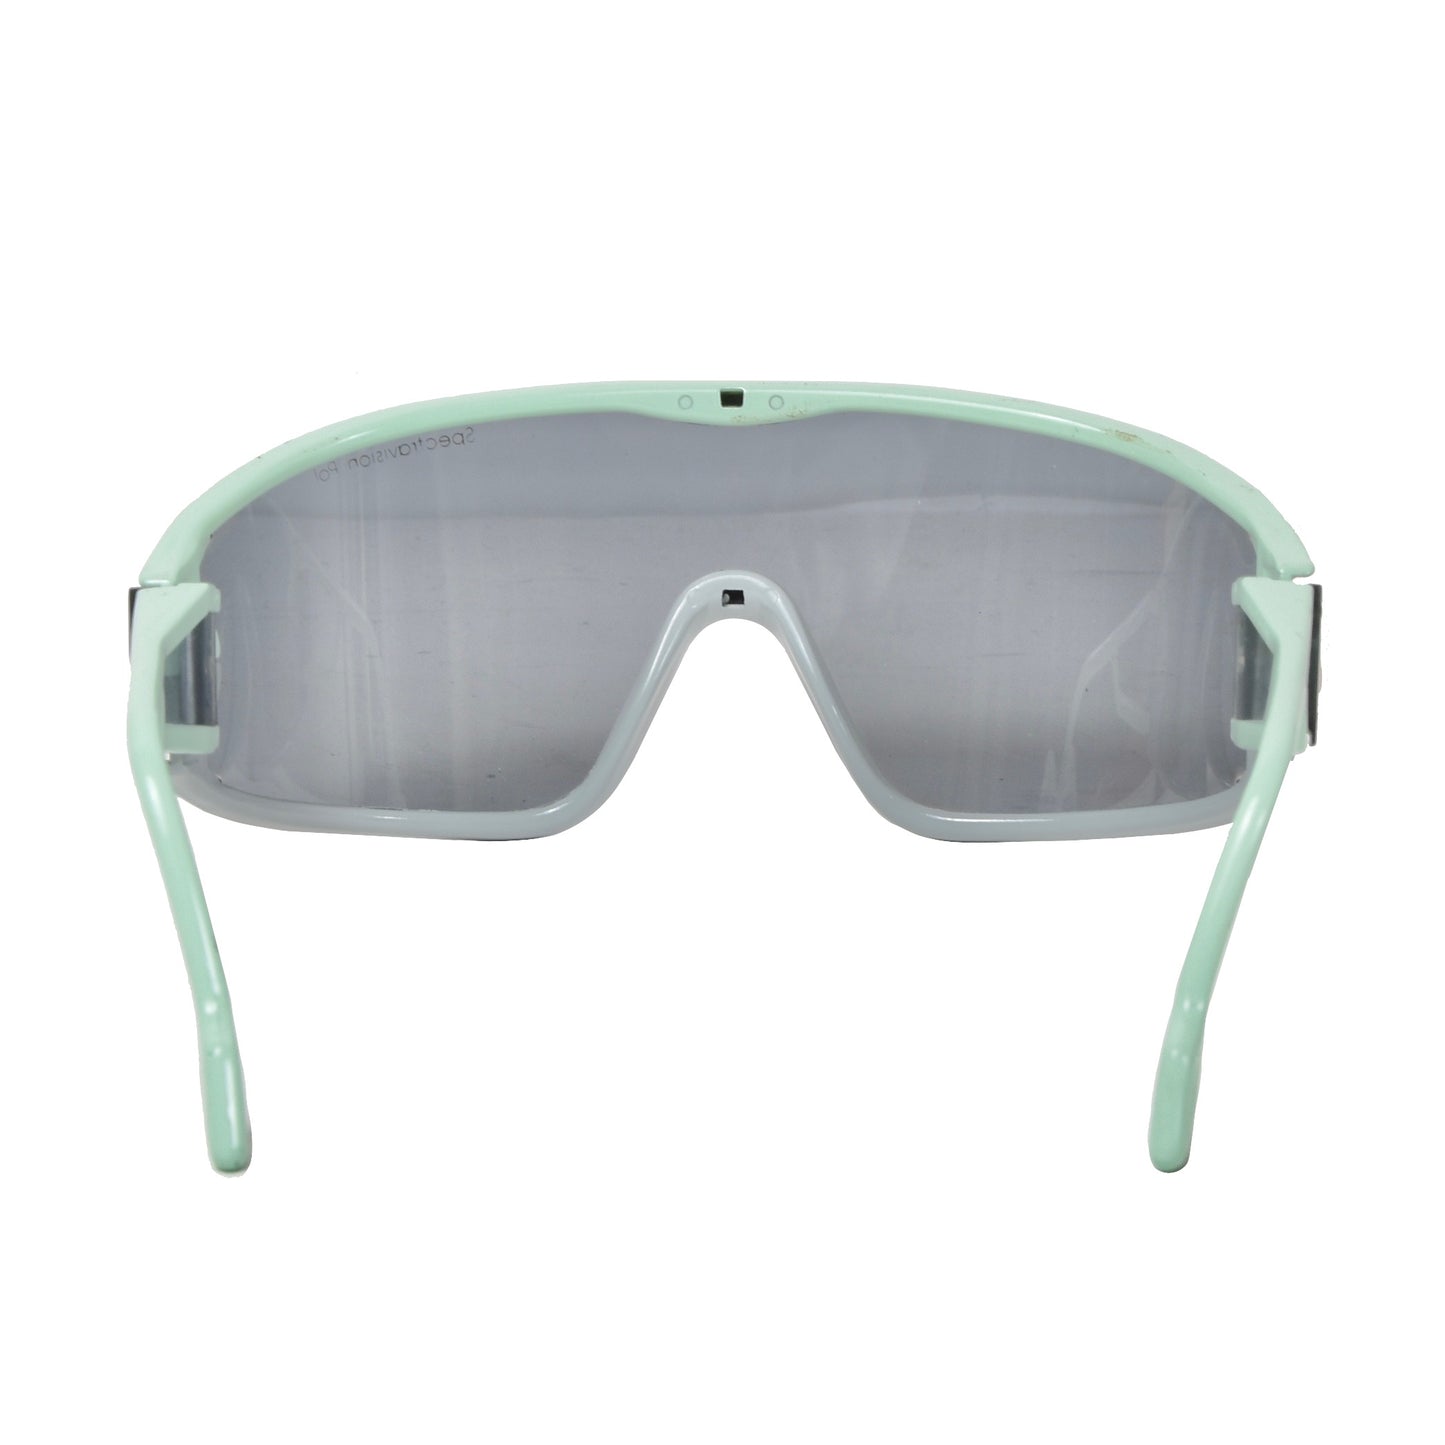 Vintage Alpina Swing Shield Sunglasses - Seafoam Green